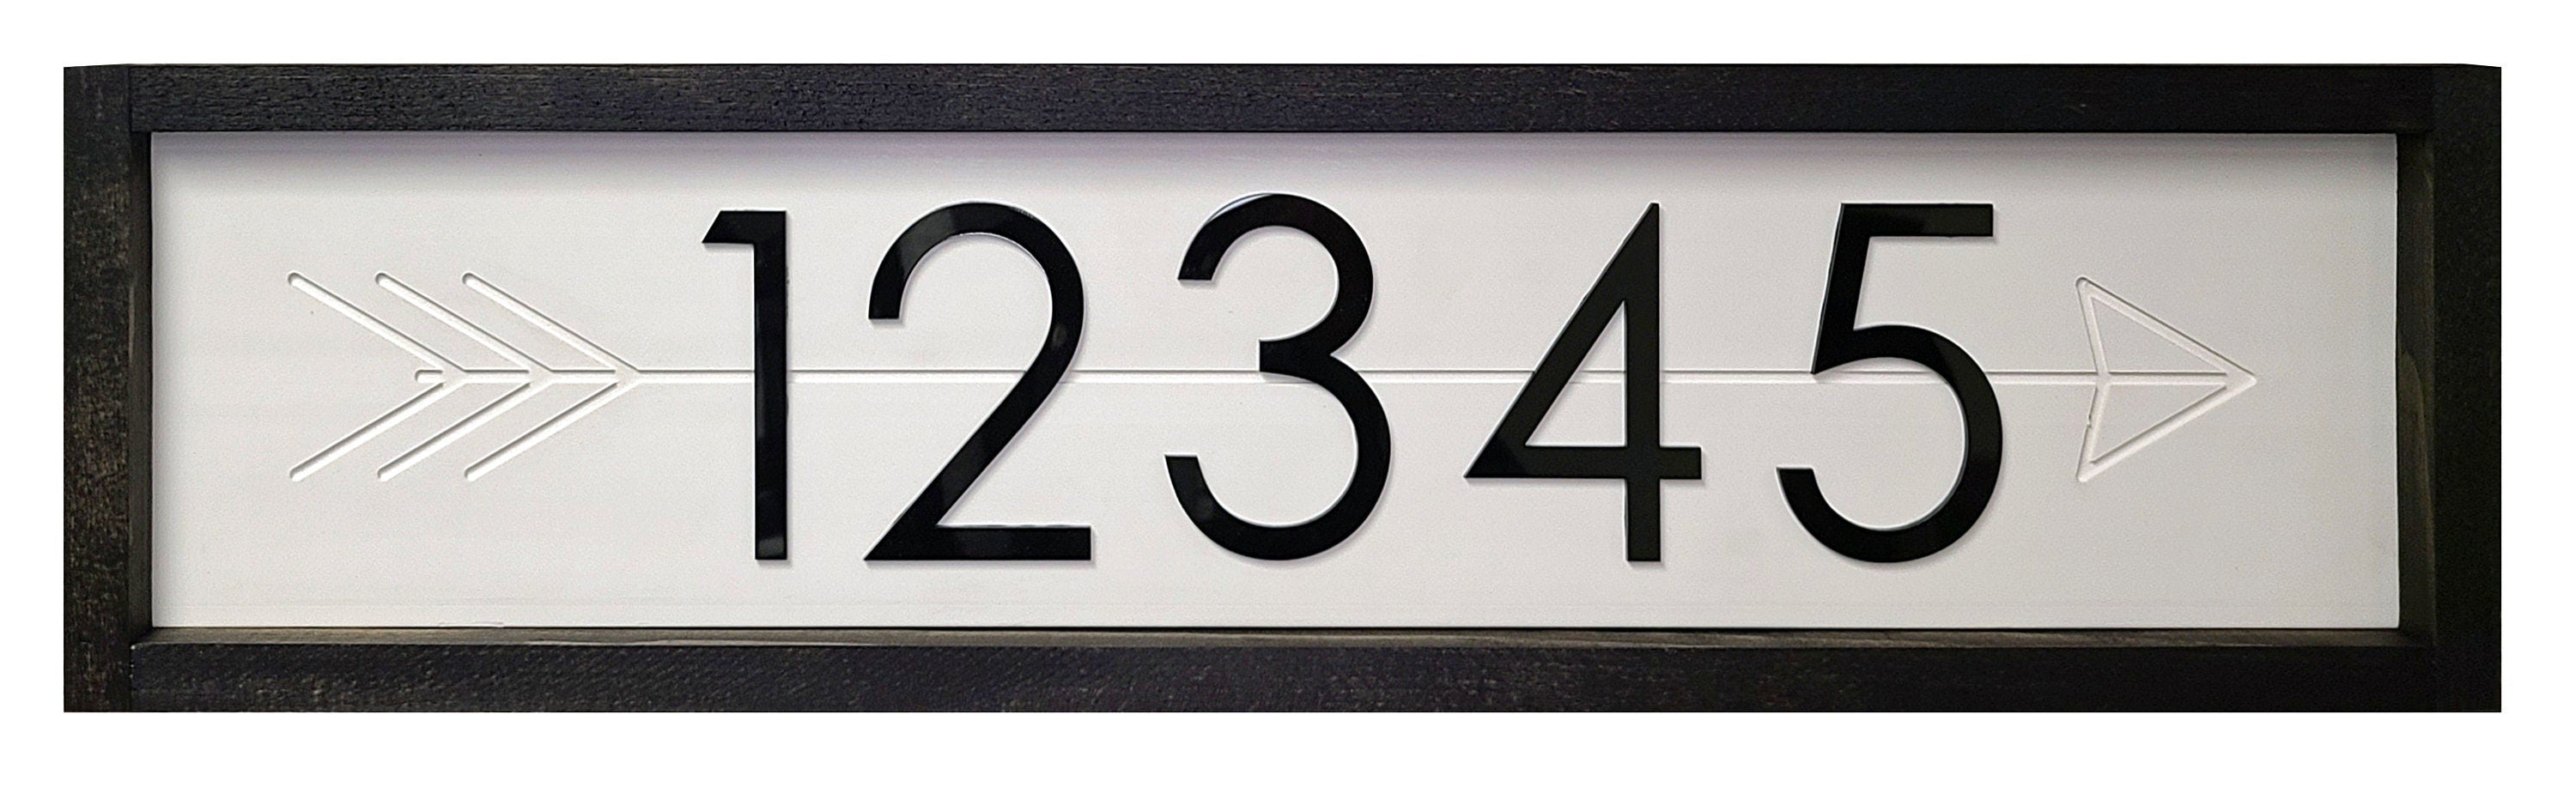 Applegate Large Arrow Address Marker for Modern Homes - Custom Farmhouse Numbers Sign